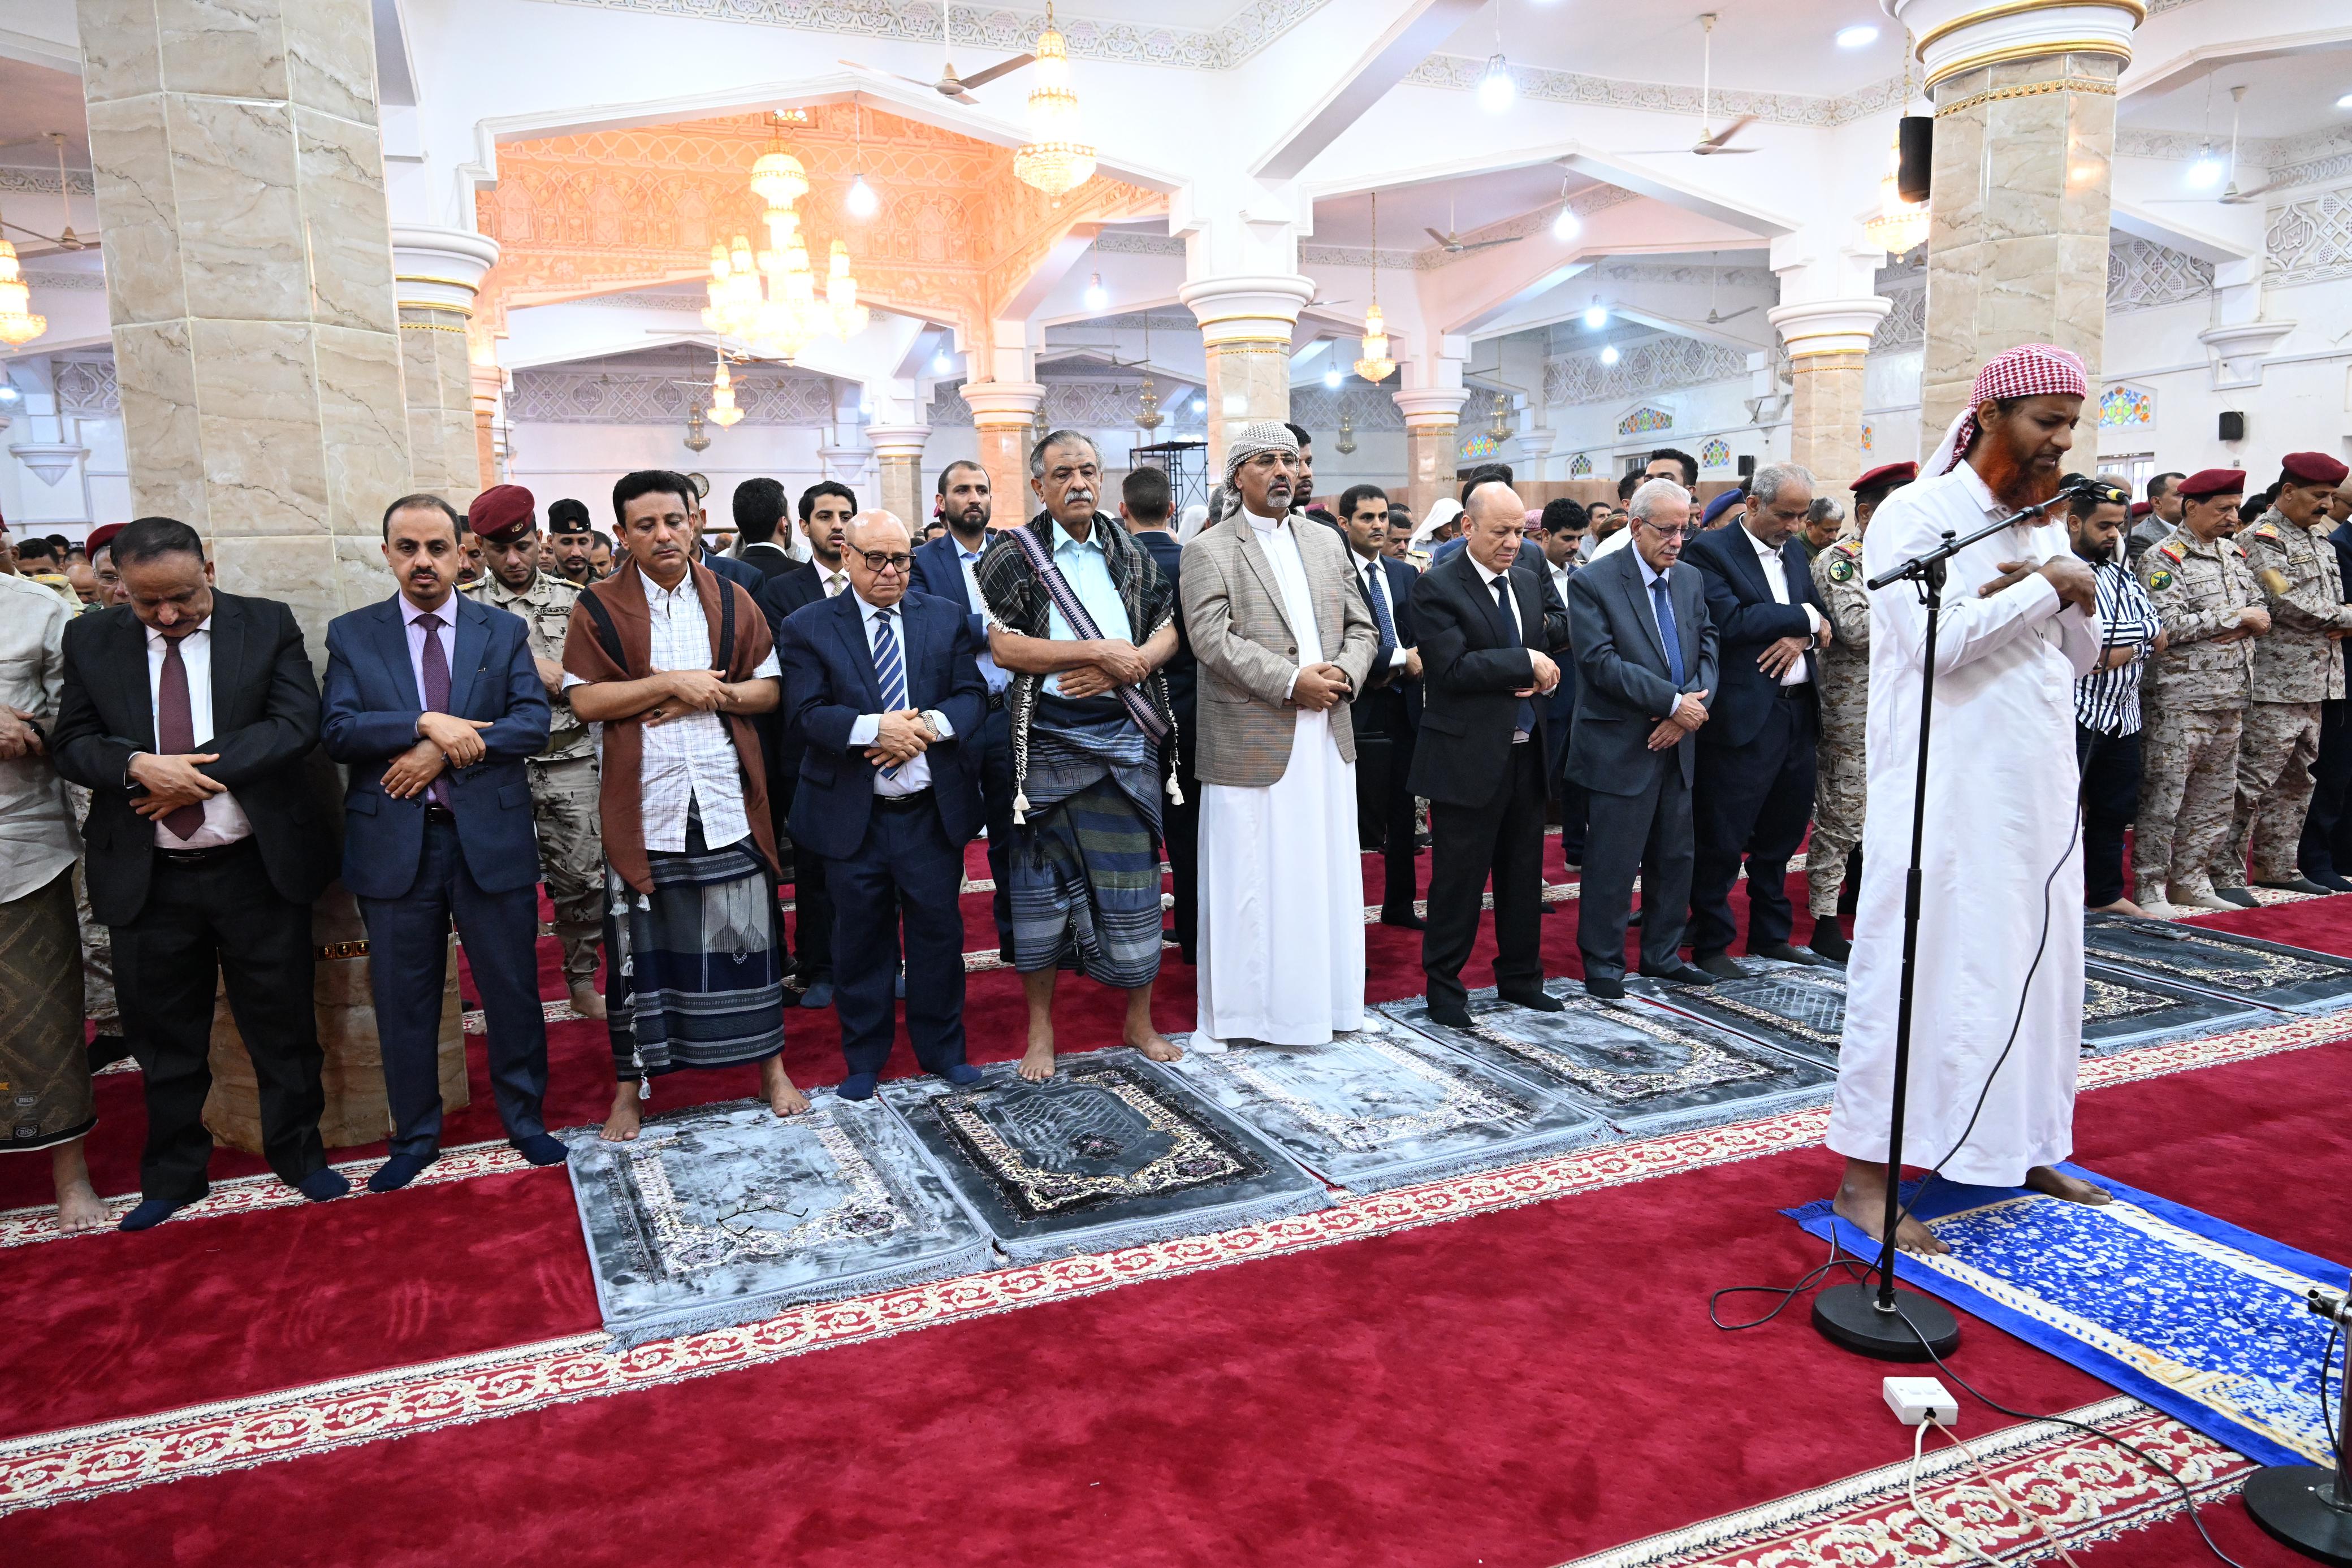 President AL-Alimi Along With Council Member, Aidarous AL-ZUBAIDI And Crowds Of Citizens Perform Eid AL-Adha Prayer 